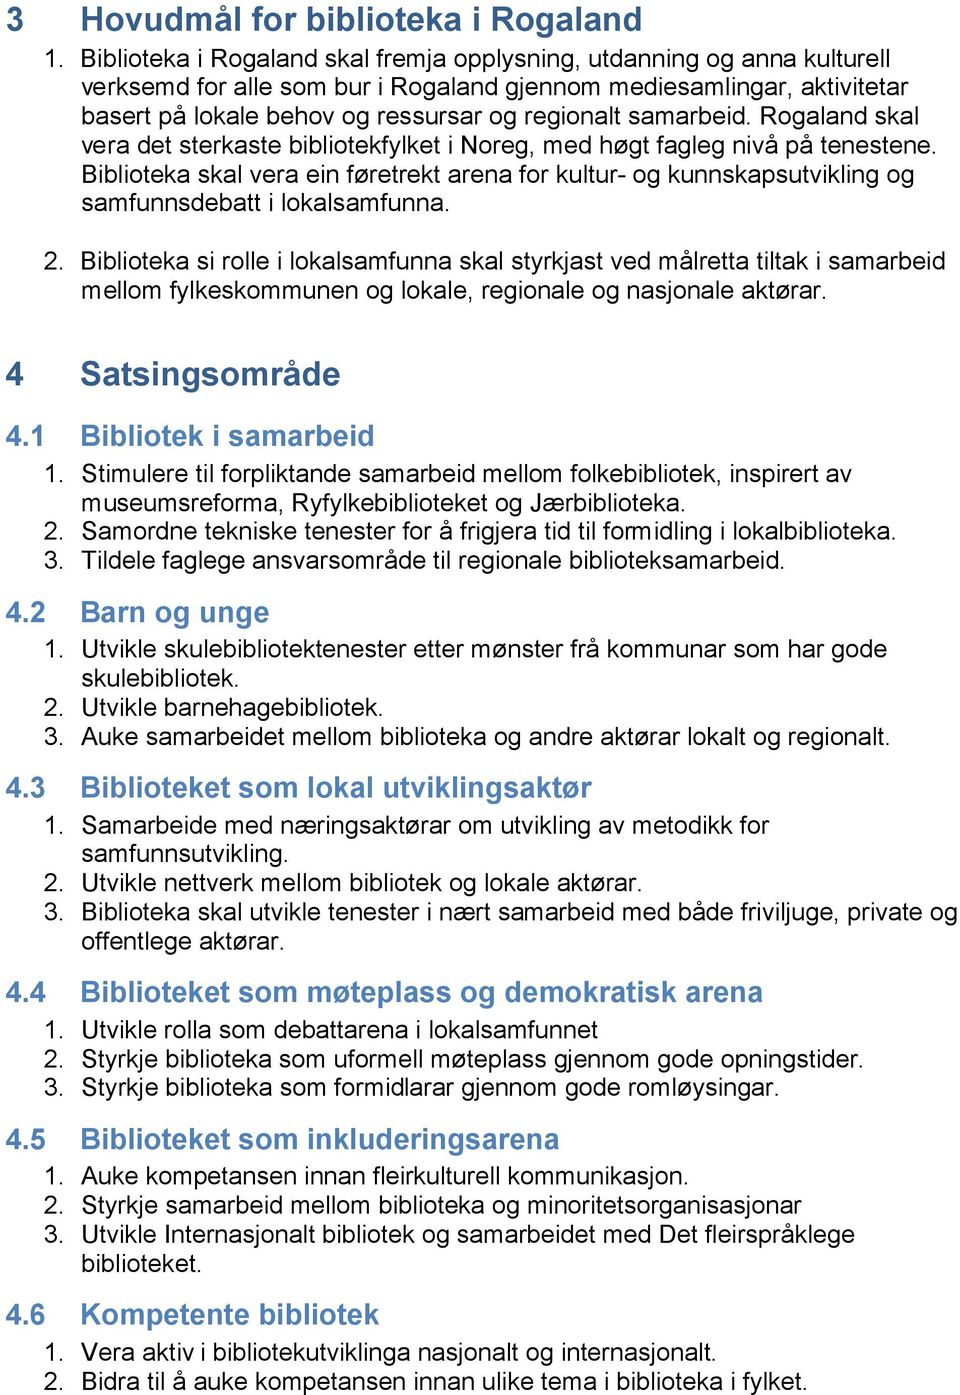 samarbeid. Rogaland skal vera det sterkaste bibliotekfylket i Noreg, med høgt fagleg nivå på tenestene.